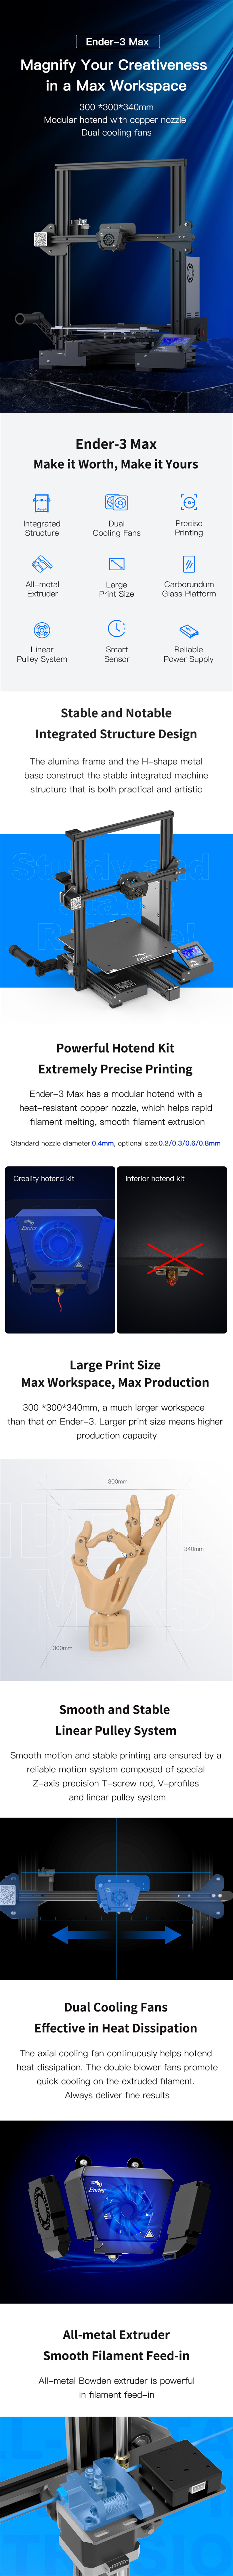 Creality 3D® Ender-3 MAX 3D Printer 300x300x340MM Prinz Size Dual Cooling Fans/All-metal Extruder/Larger Carborundum Glass Platform/Smart Sensor/Relia 15